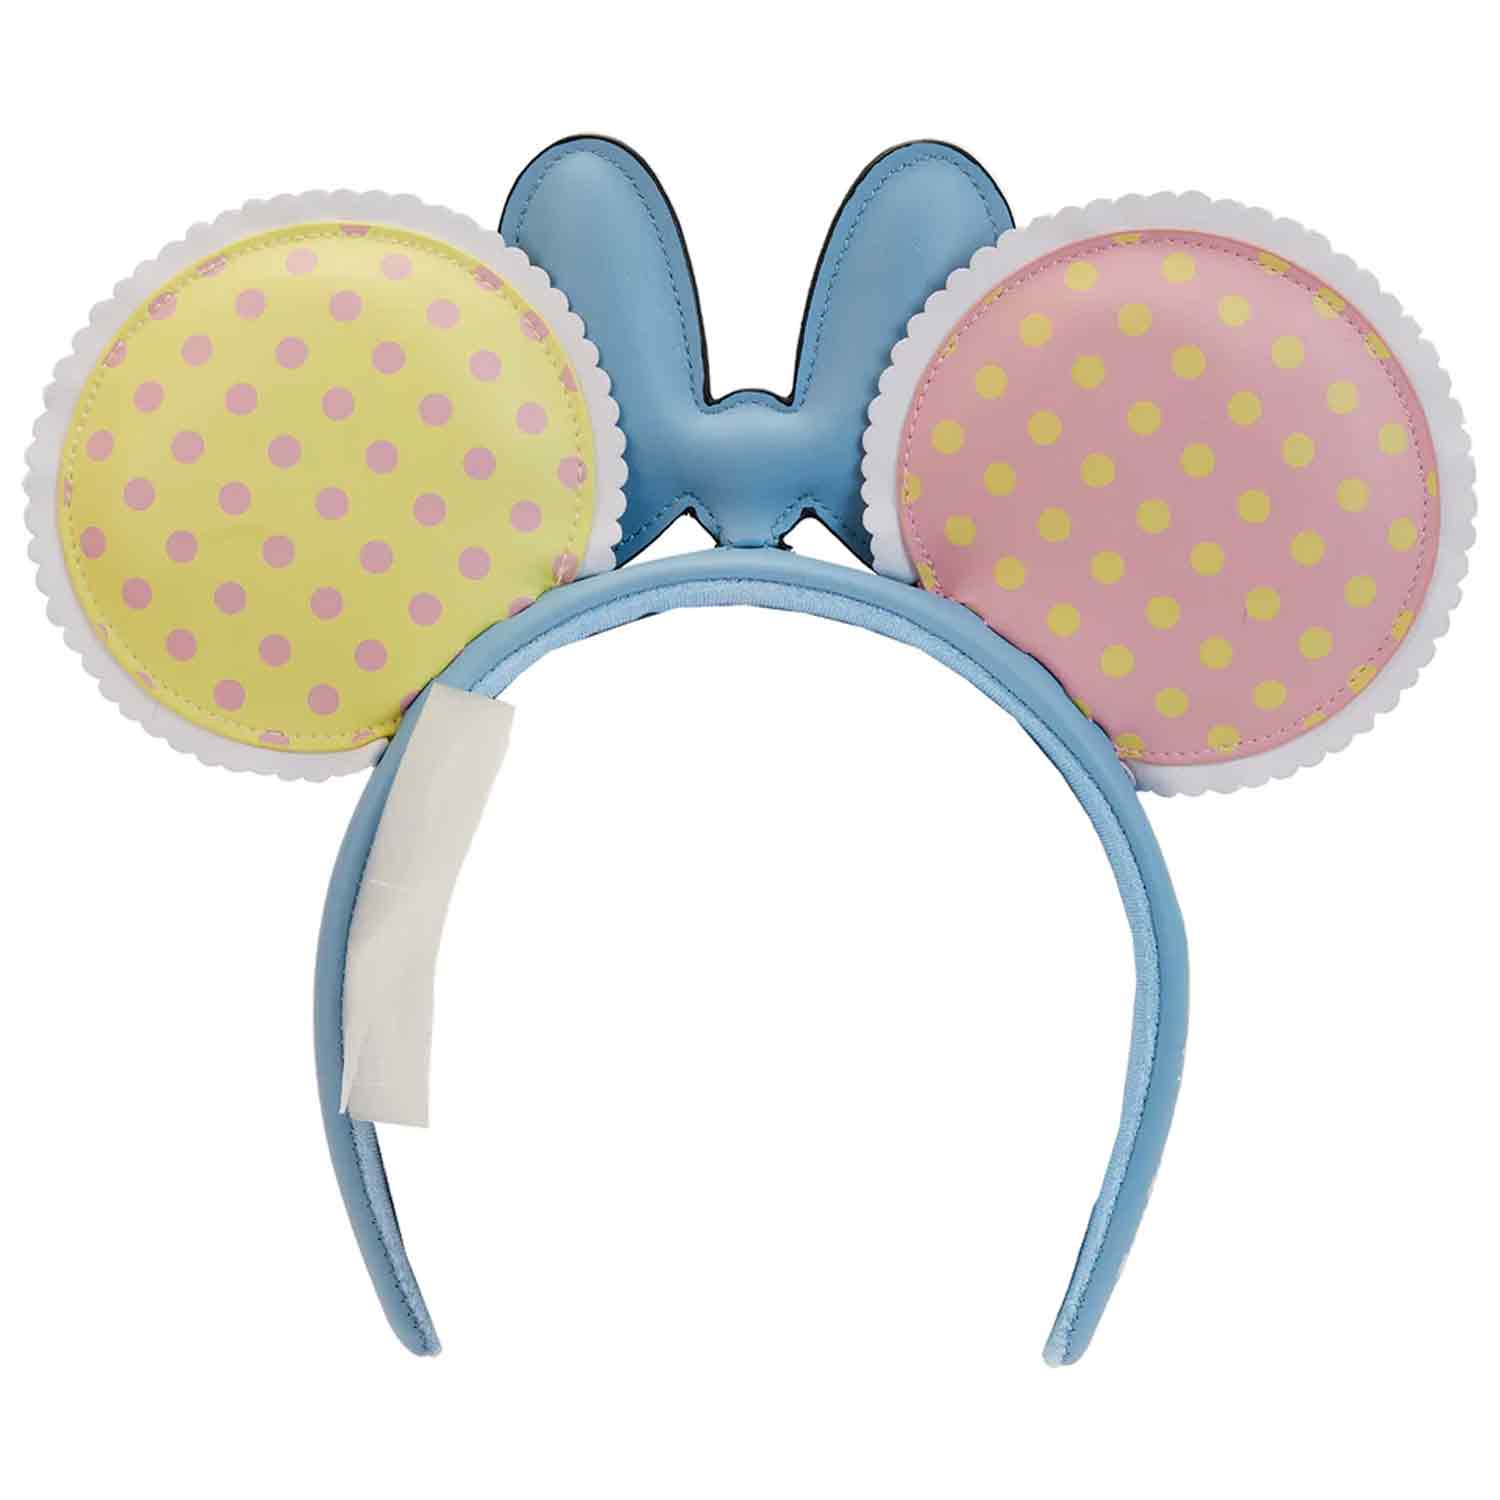 Loungefly x Disney Minnie Mouse Pastel Polka Dot Ear Headband - GeekCore